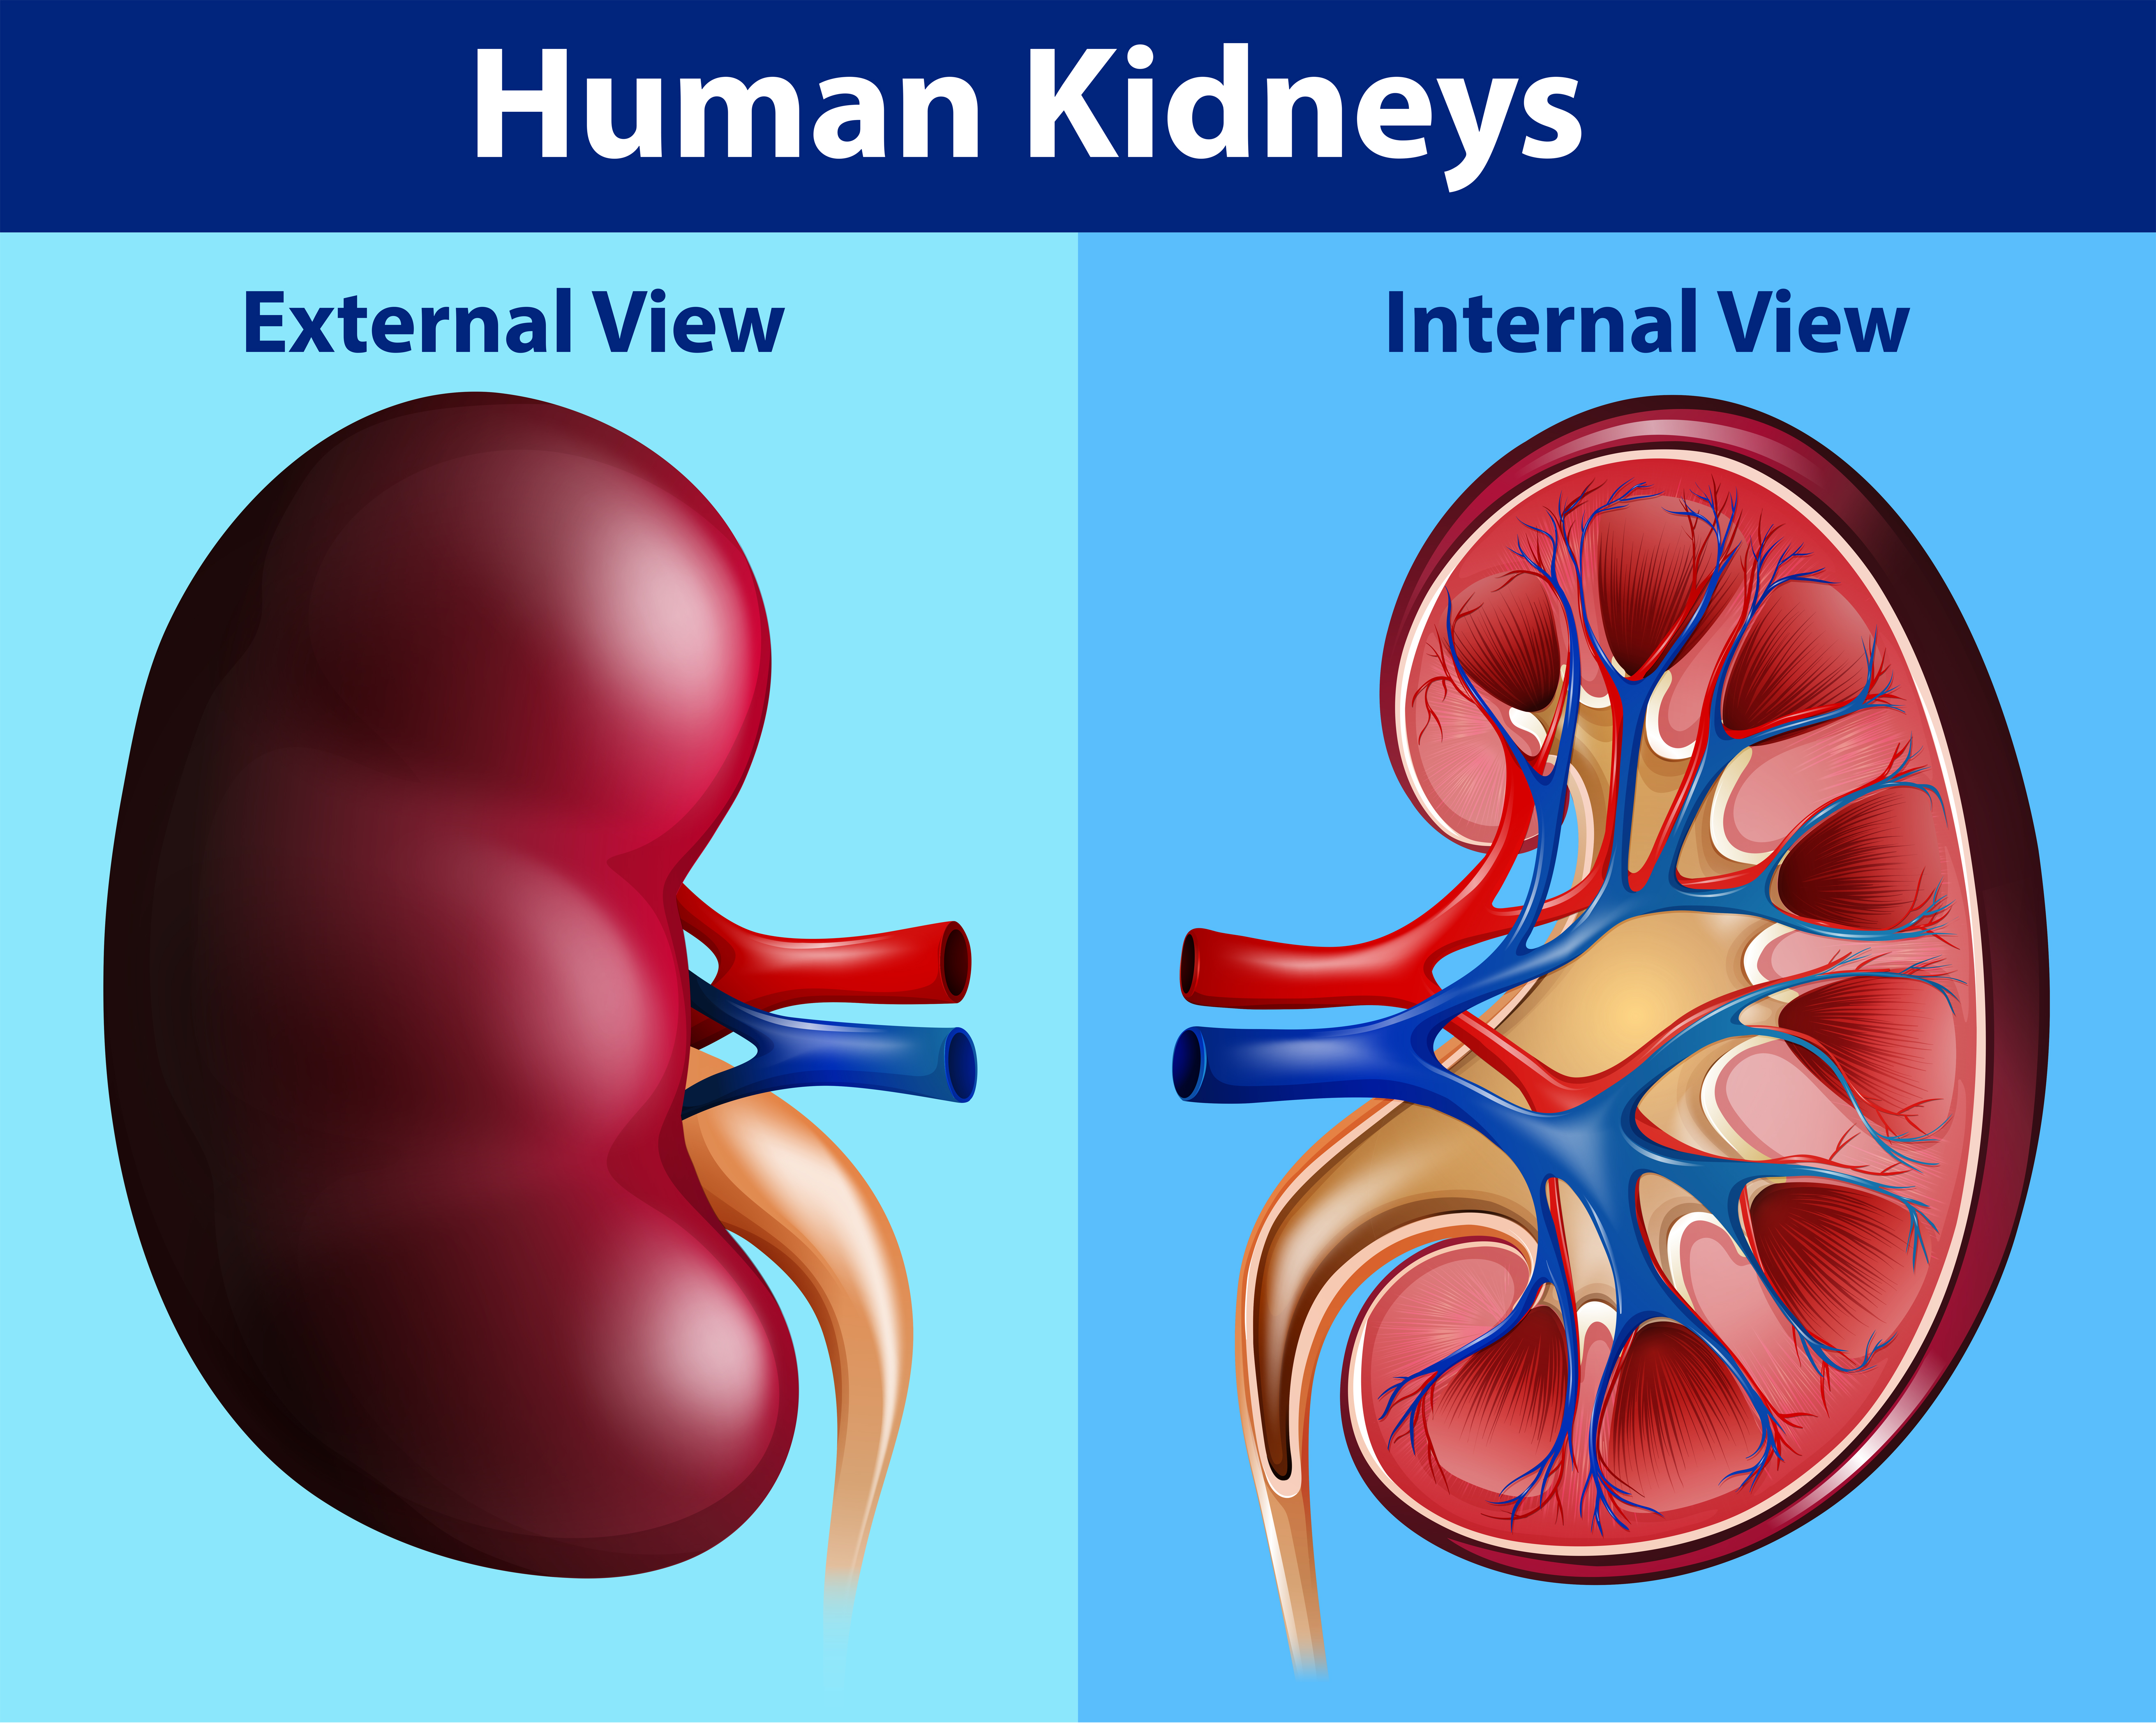 Human anatomy diagram with kidneys - Download Free Vectors, Clipart Graphics & Vector Art